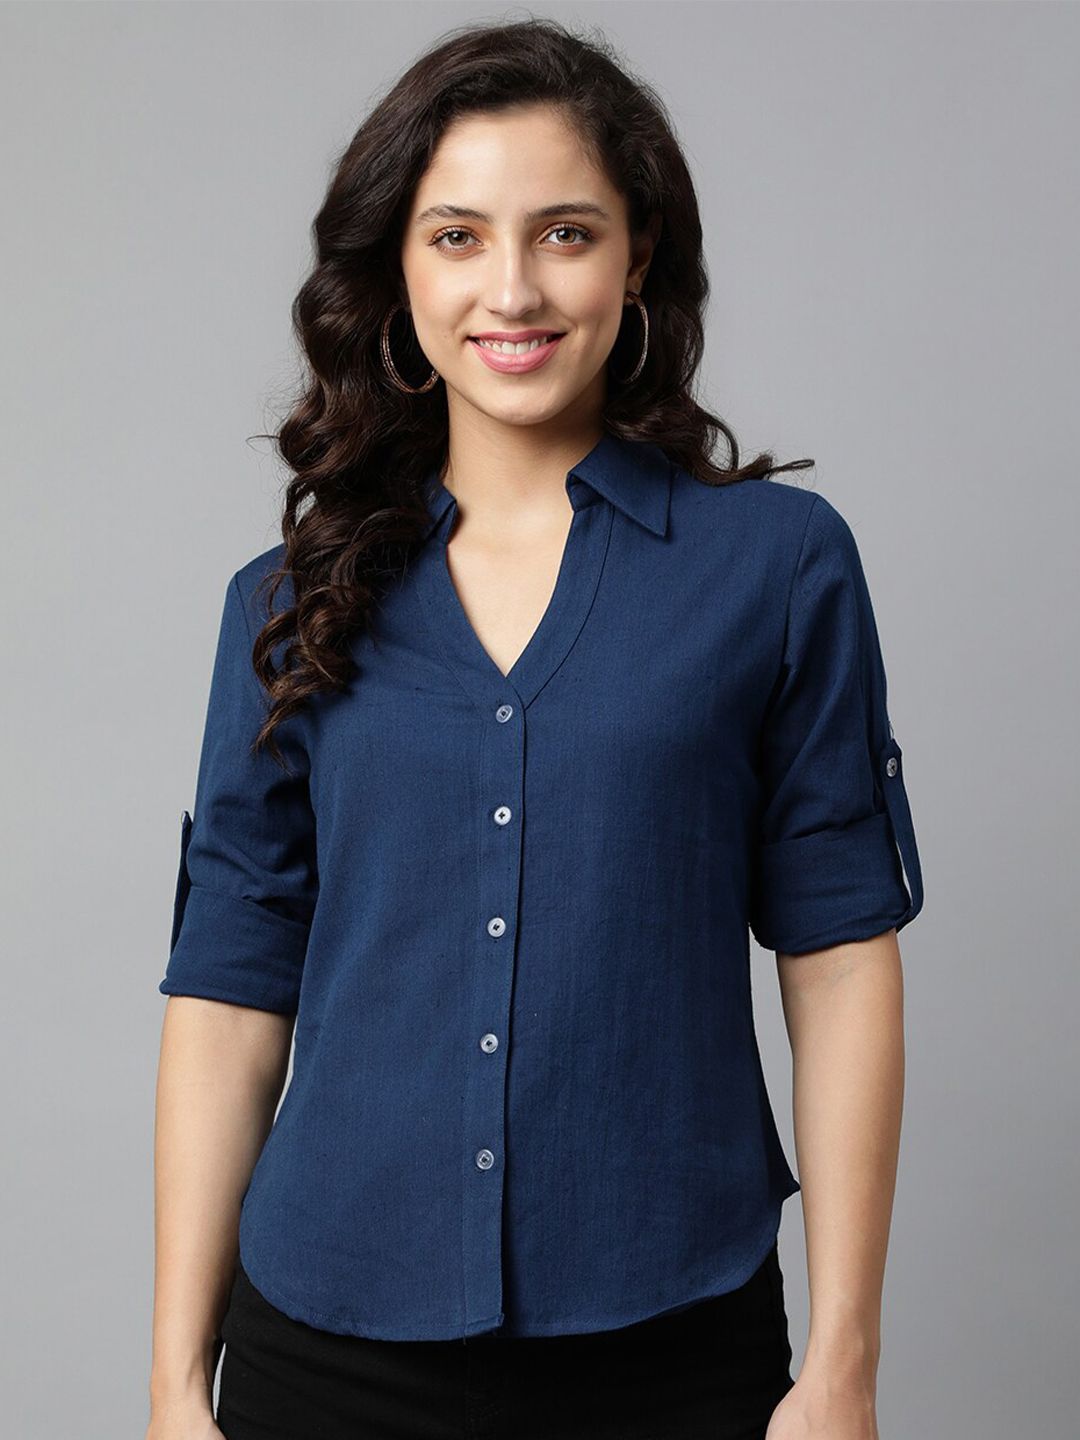 DEEBACO Women Navy Blue Premium Cotton Casual Shirt Price in India